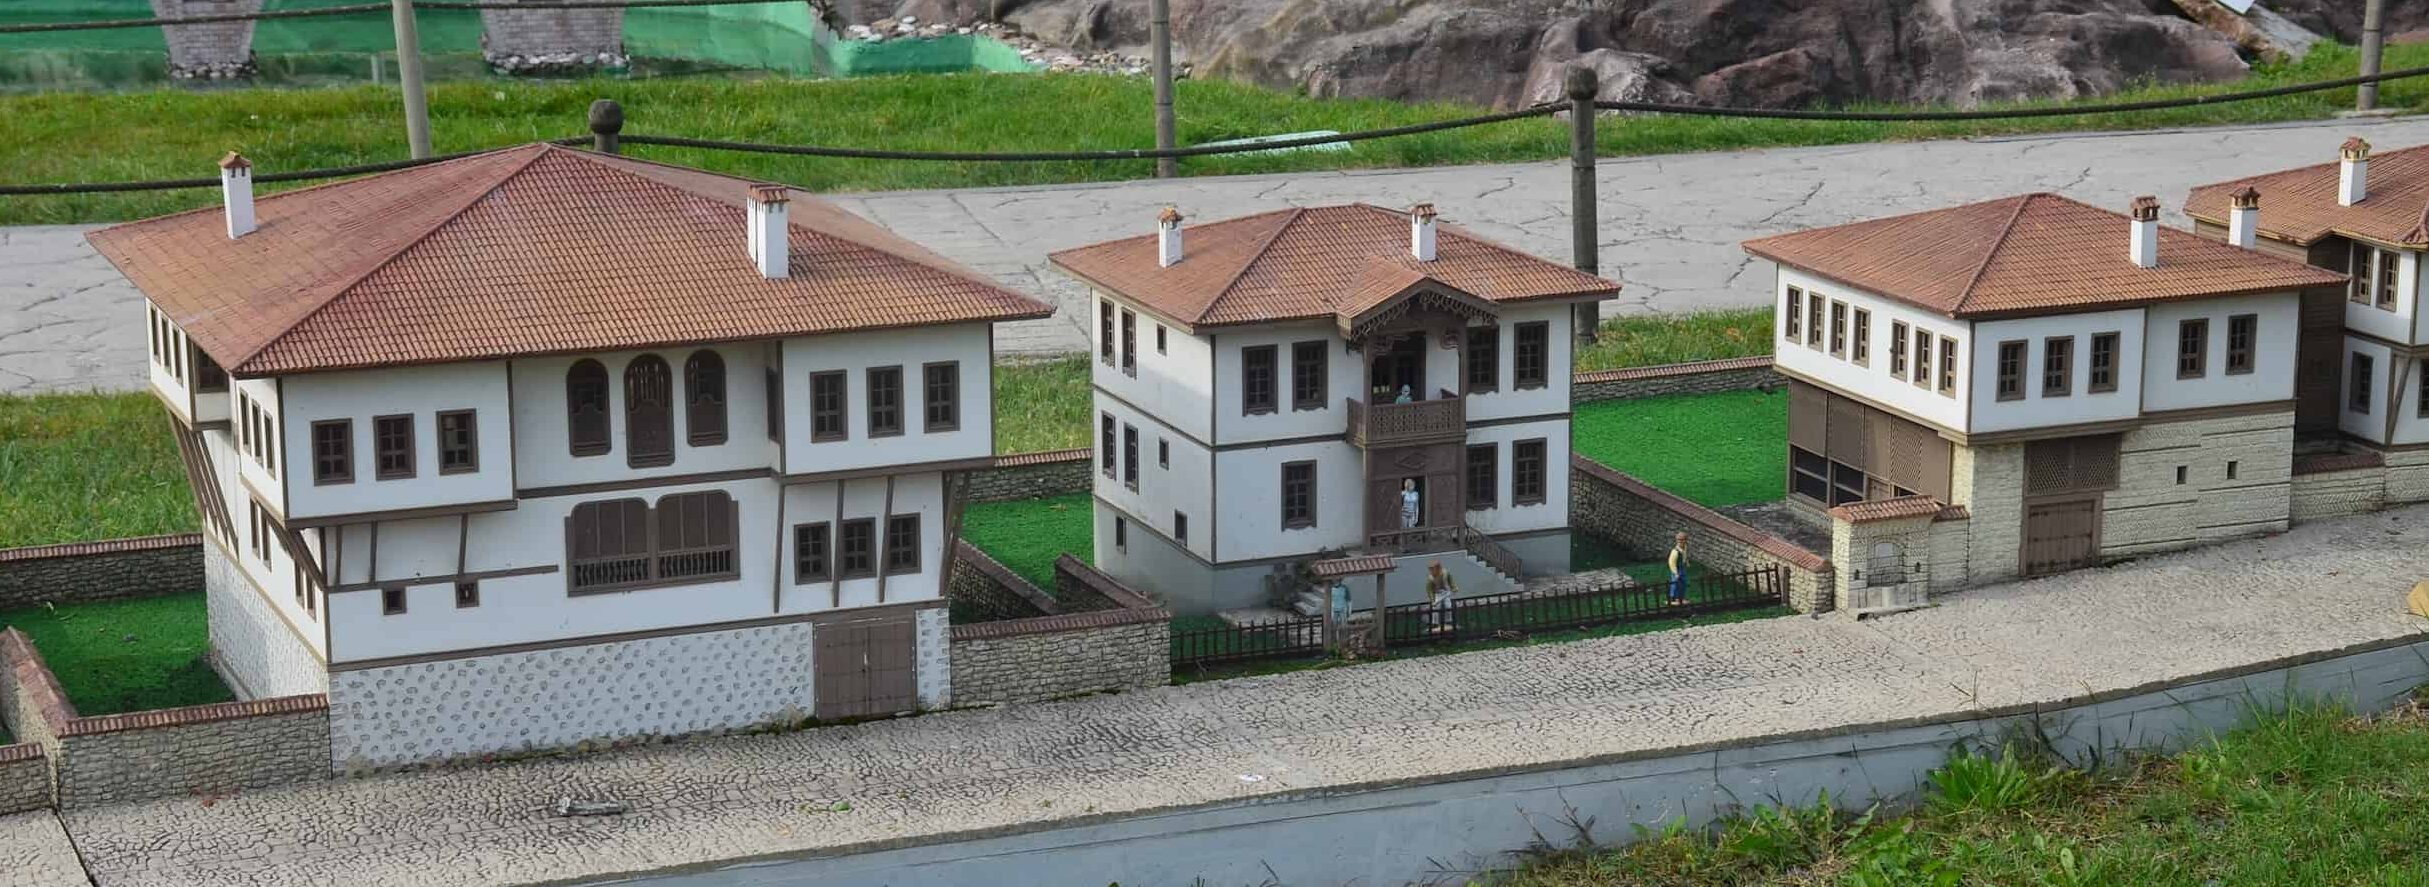 Model of Safranbolu homes, 17th-19th centuries at Miniatürk in Istanbul, Turkey